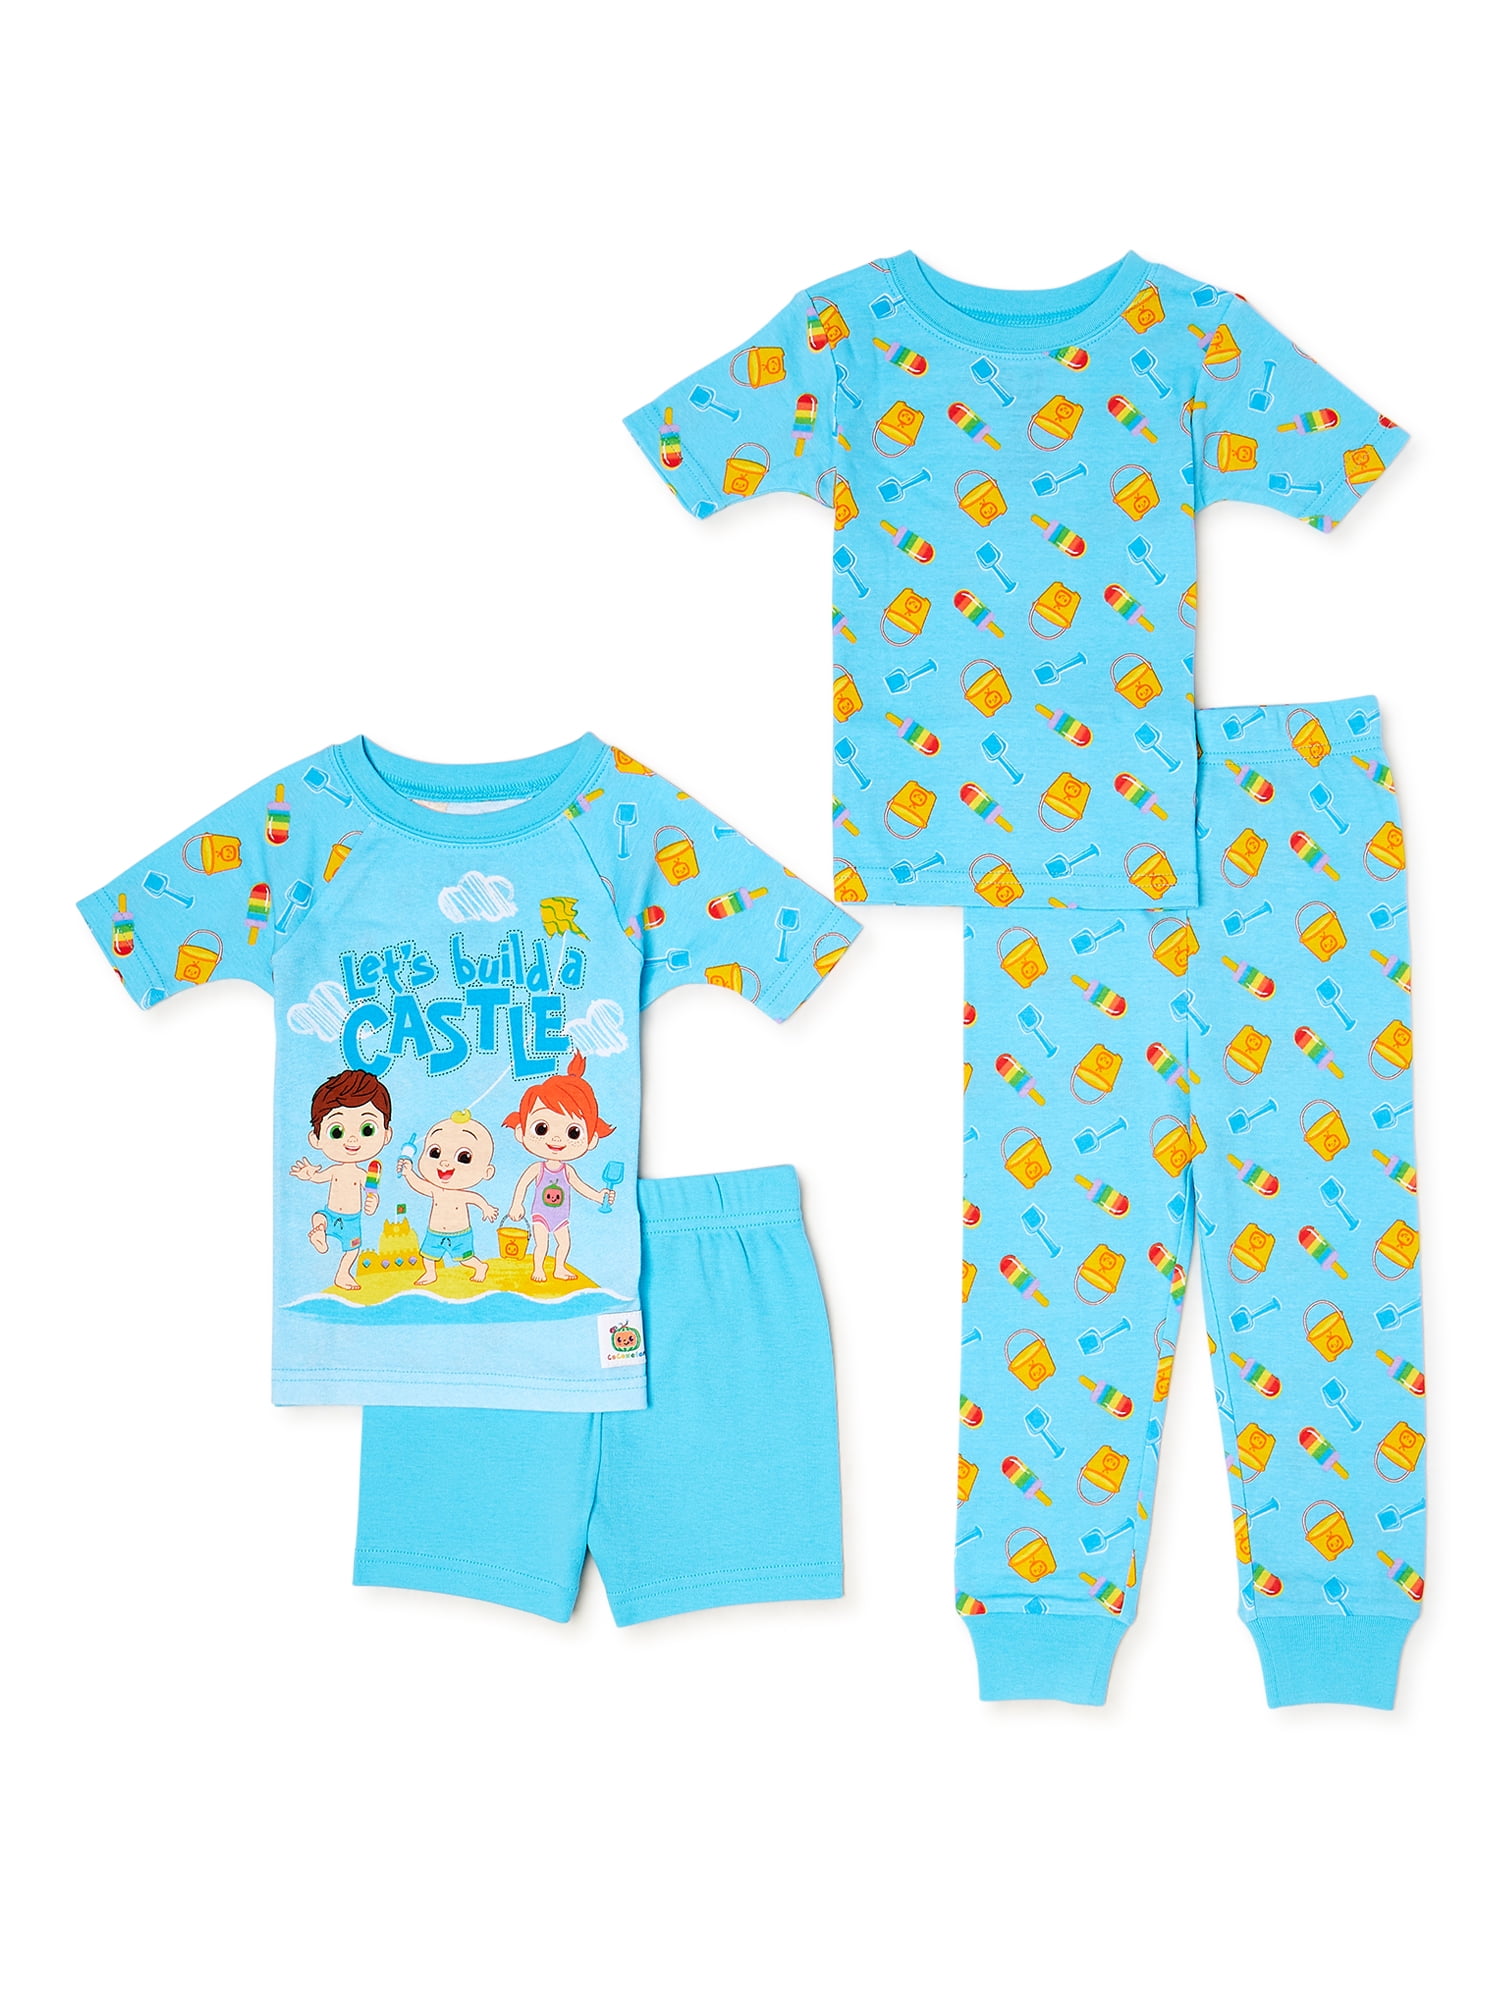 Only Boys Baby Boys Pajama Set 4 Piece Short Sleeve T-Shirt and Shorts Sleepwear Set Infant/Toddler 